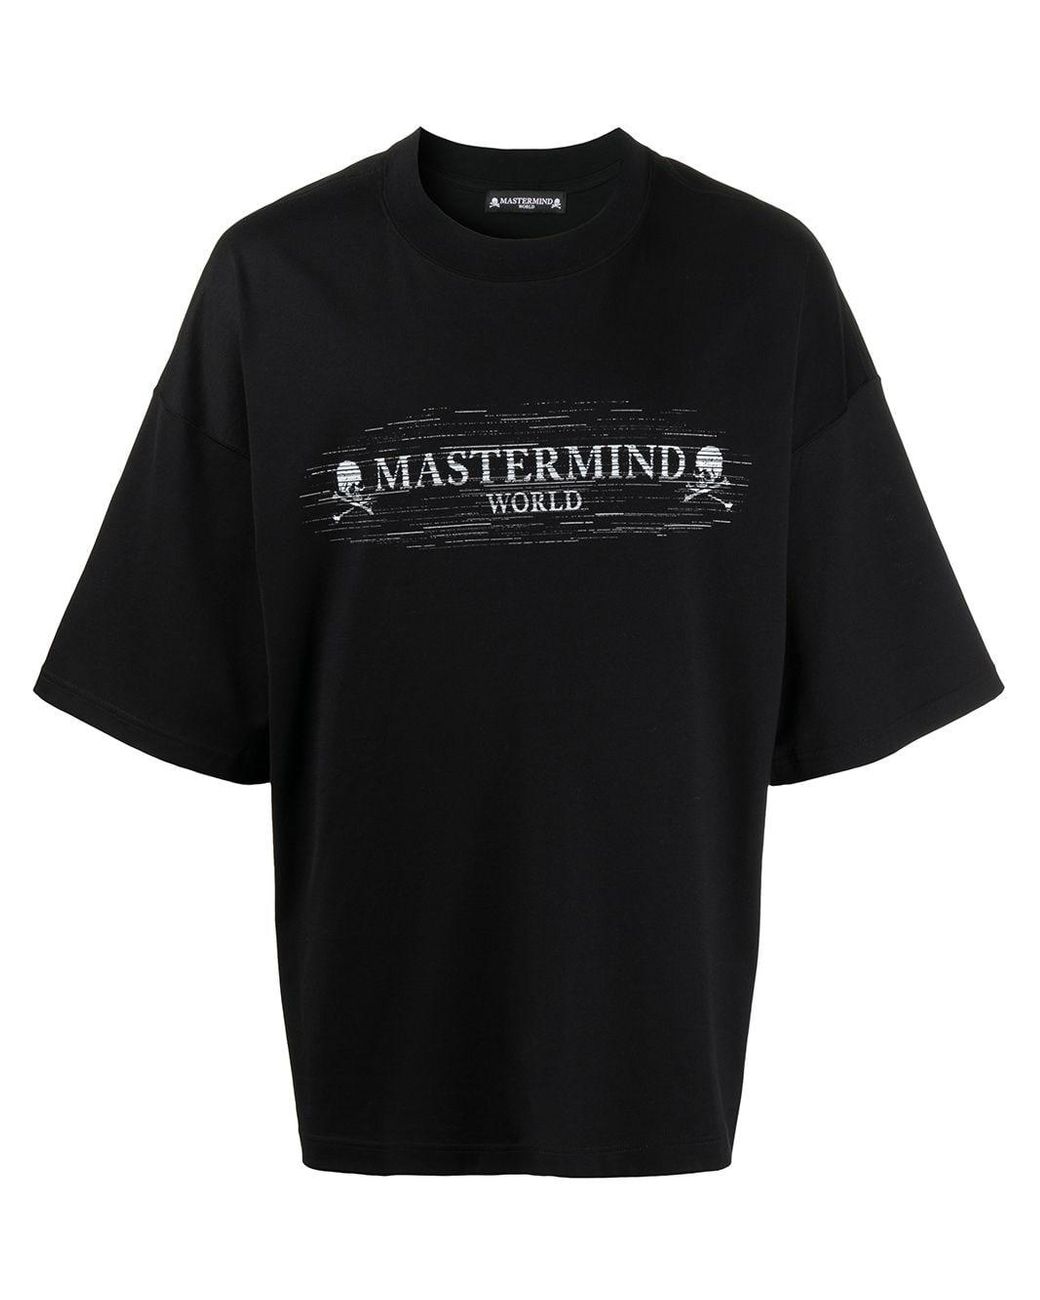 MASTERMIND WORLD Cotton Logo T-shirt in Black for Men - Lyst